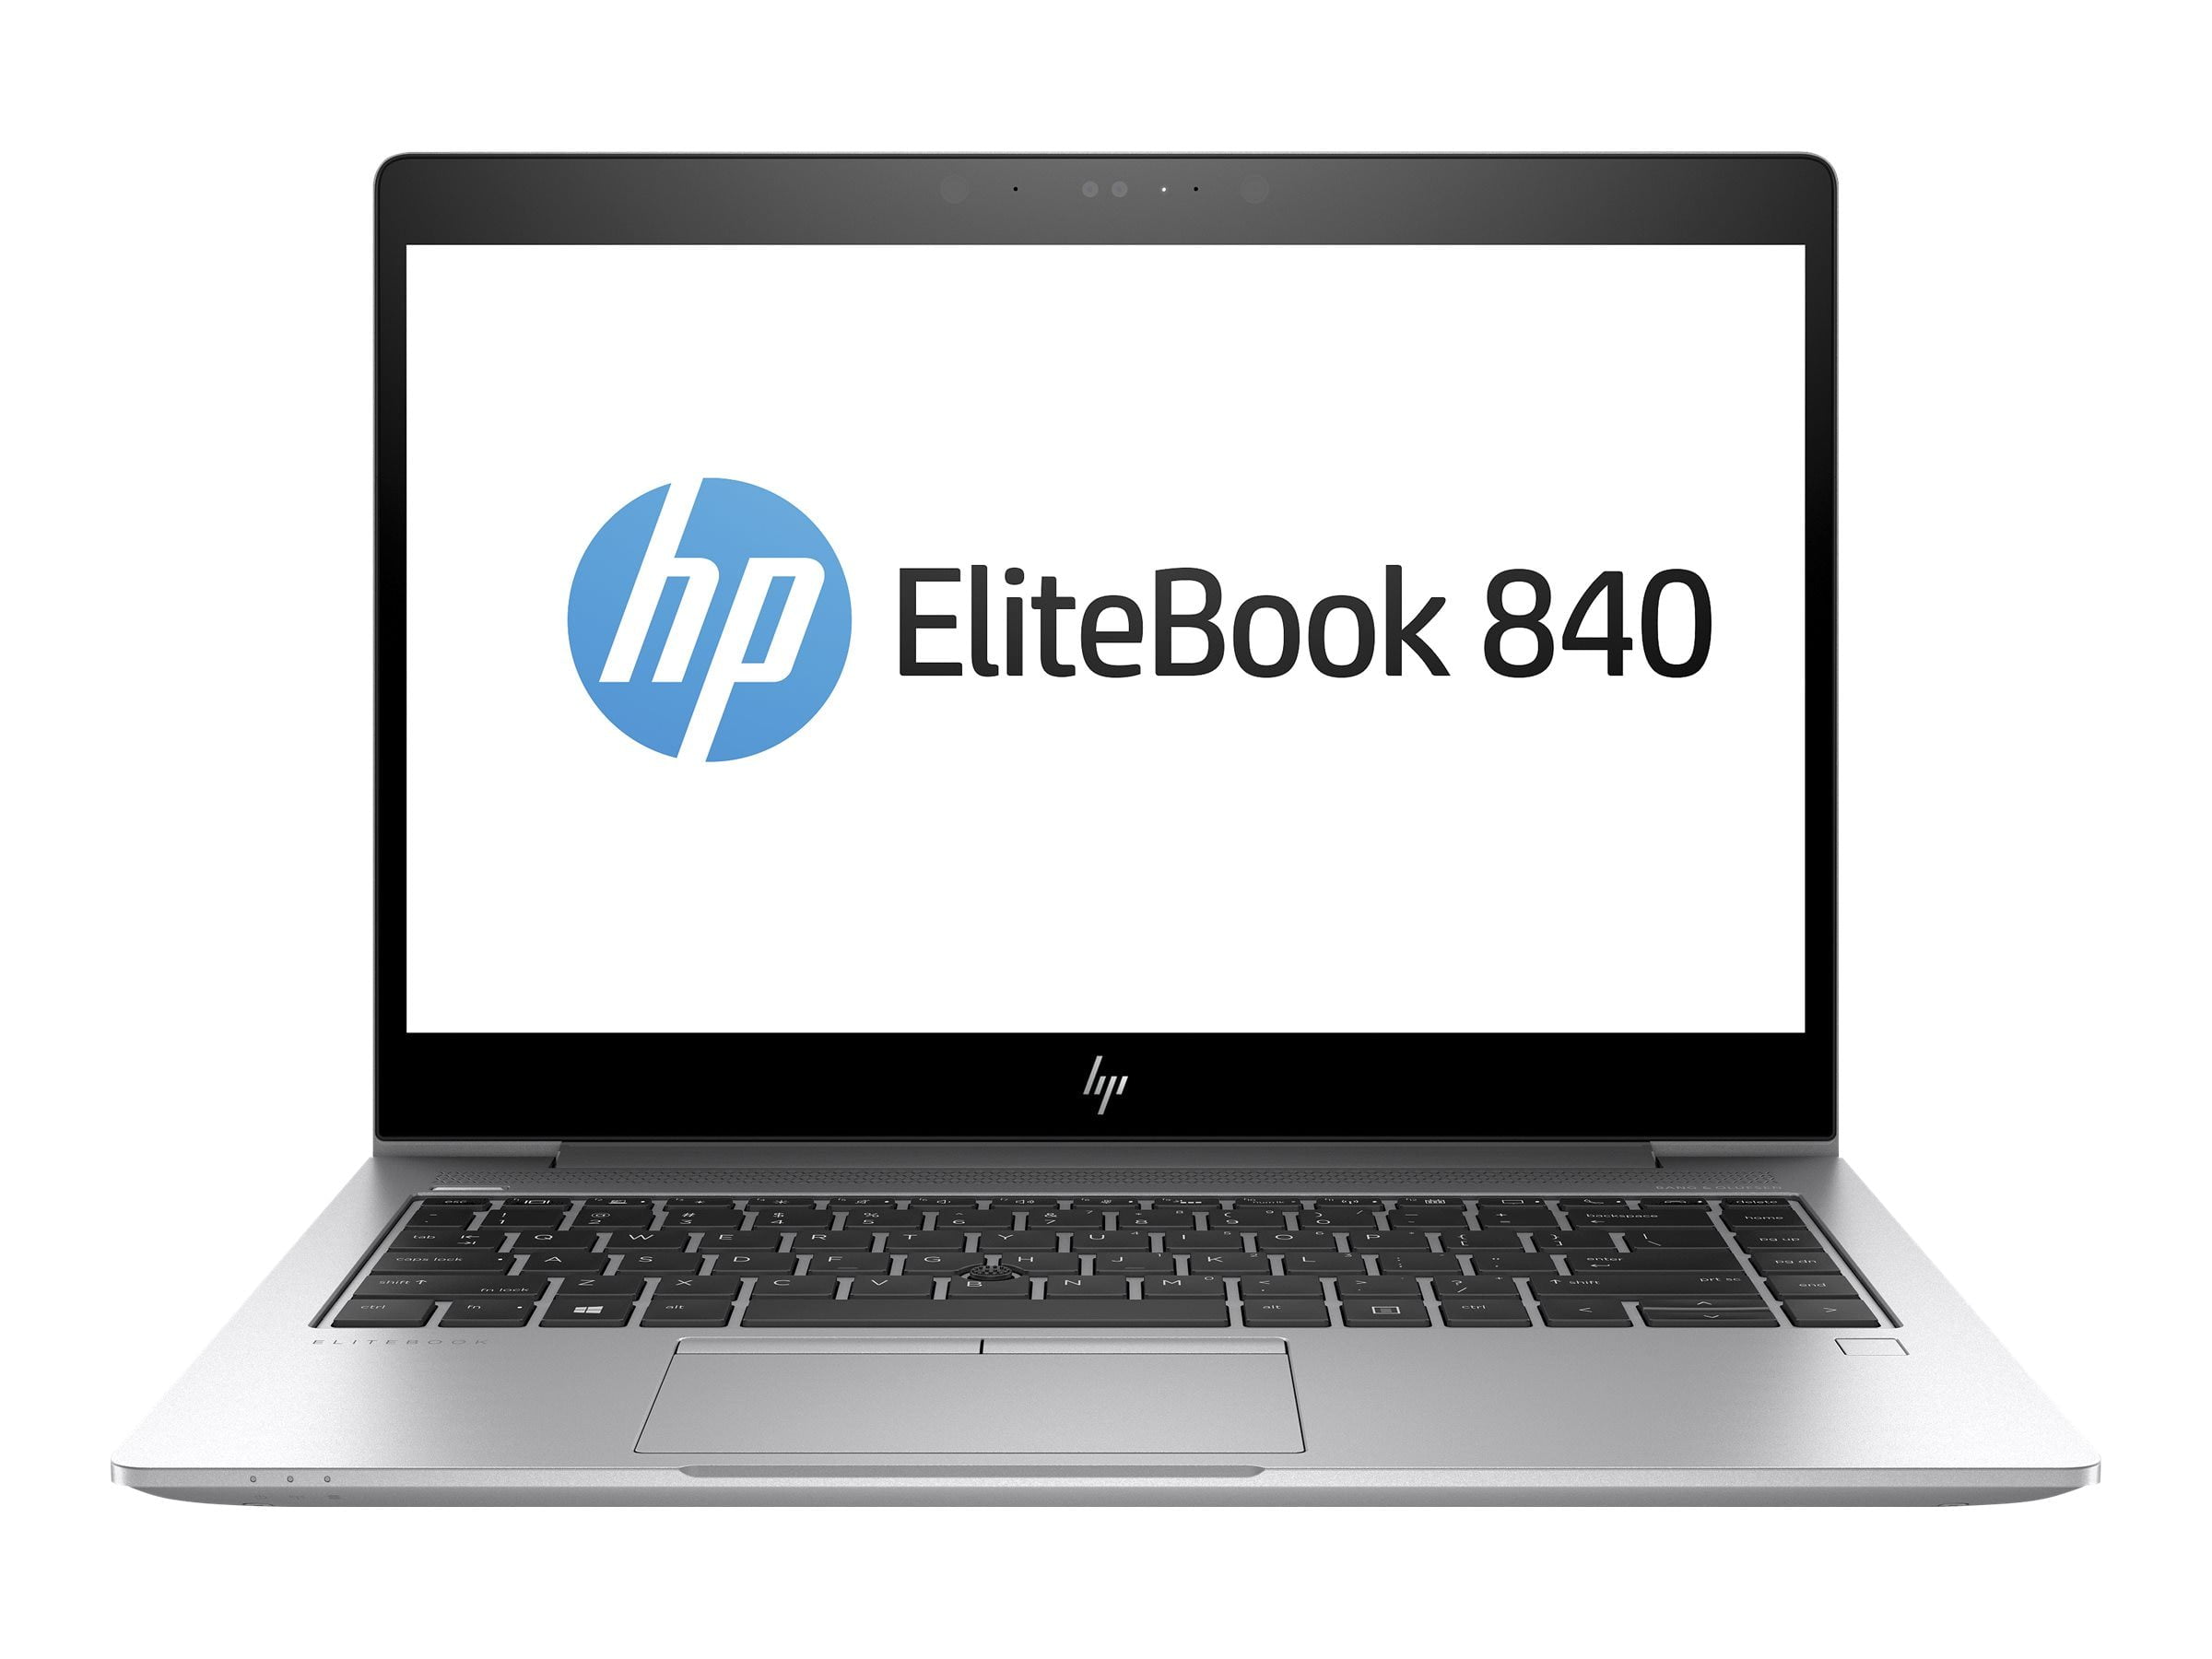 HP EliteBook 840 G5 1.9GHz Core i7 14in display - Windows 10 Pro